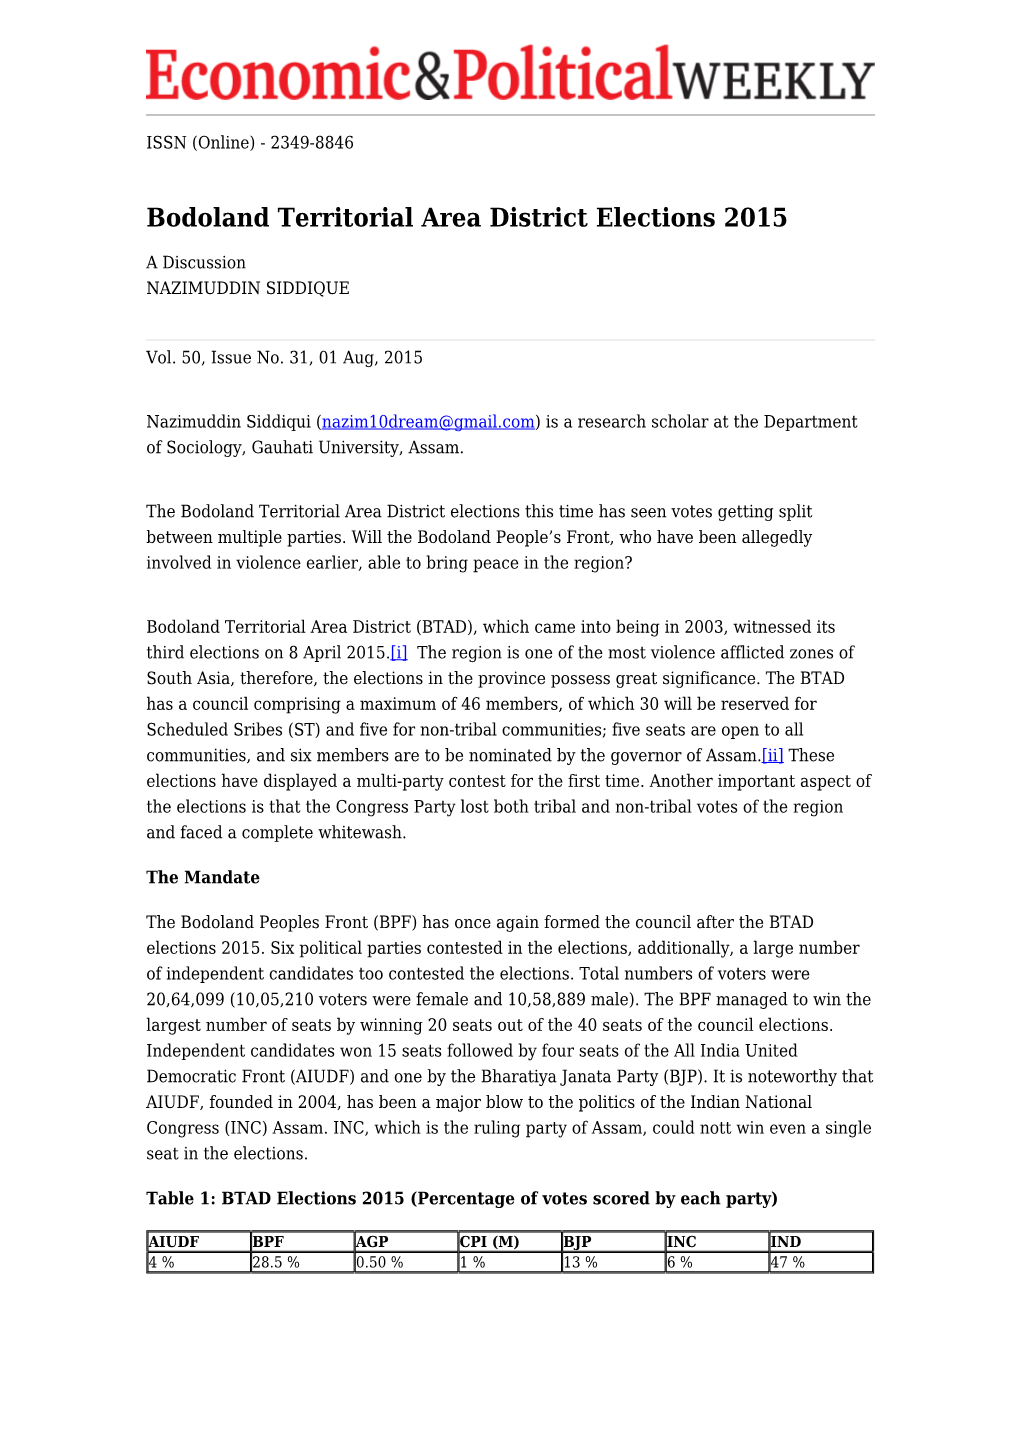 Bodoland Territorial Area District Elections 2015